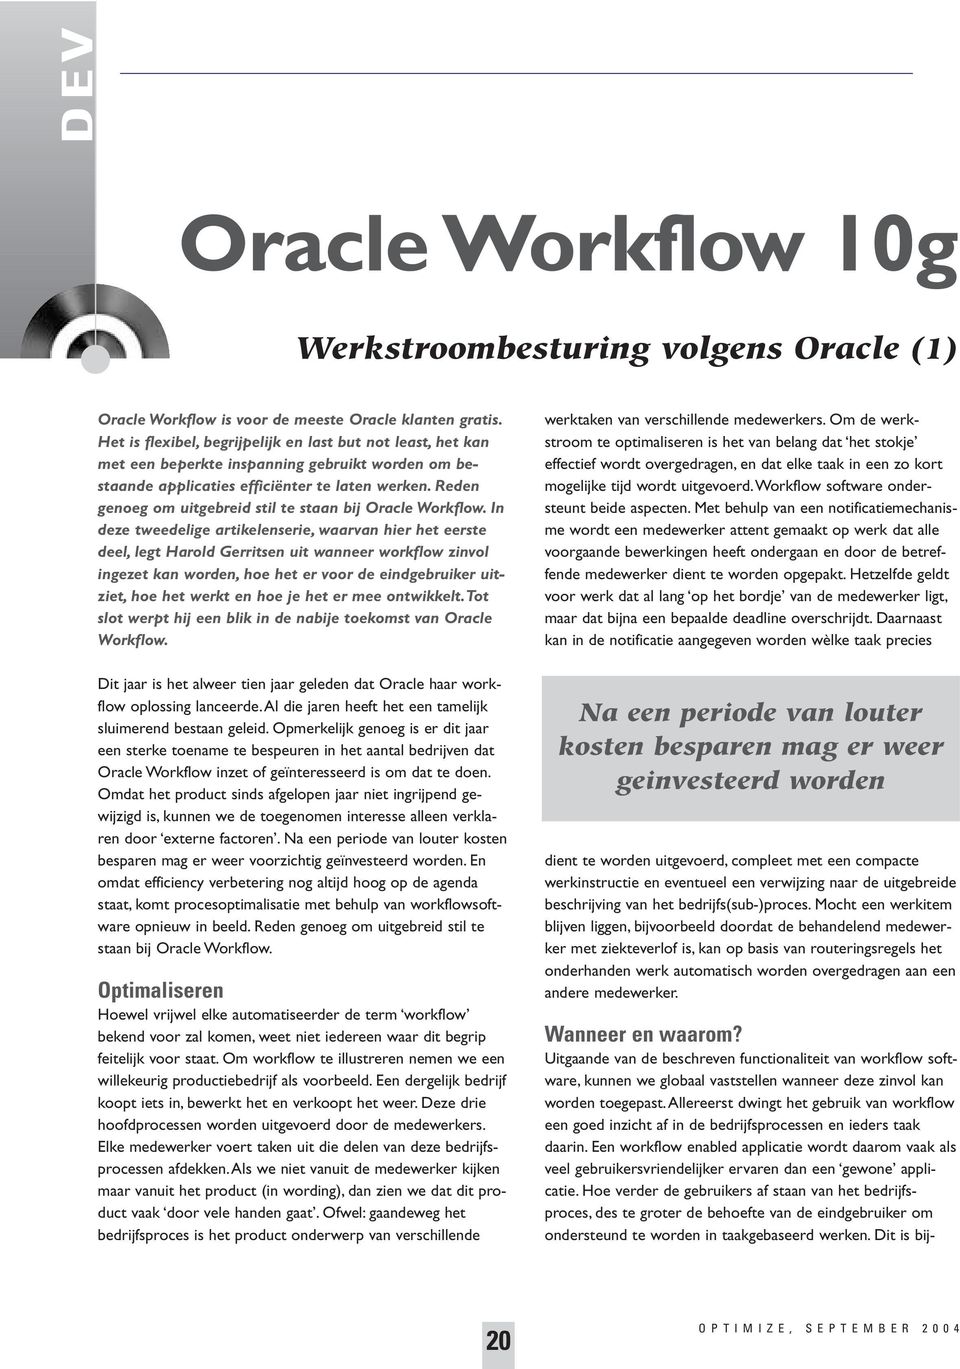 Reden genoeg om uitgebreid stil te staan bij Oracle Workflow.